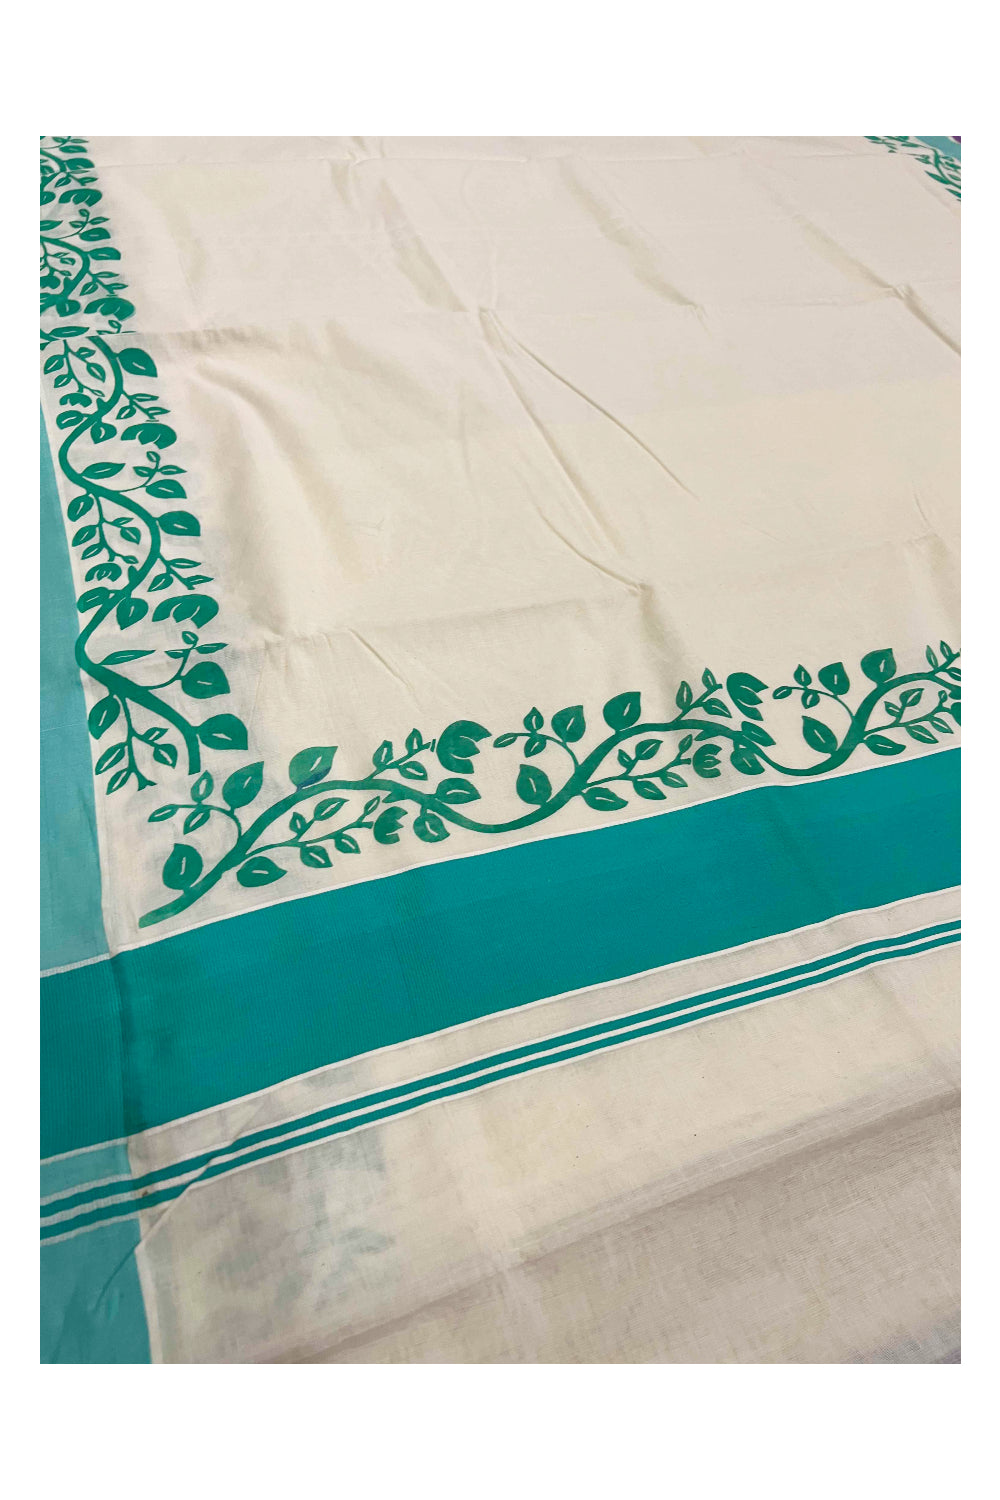 Southloom Original Design Kerala Saree with Turquoise Floral Vines Block Print